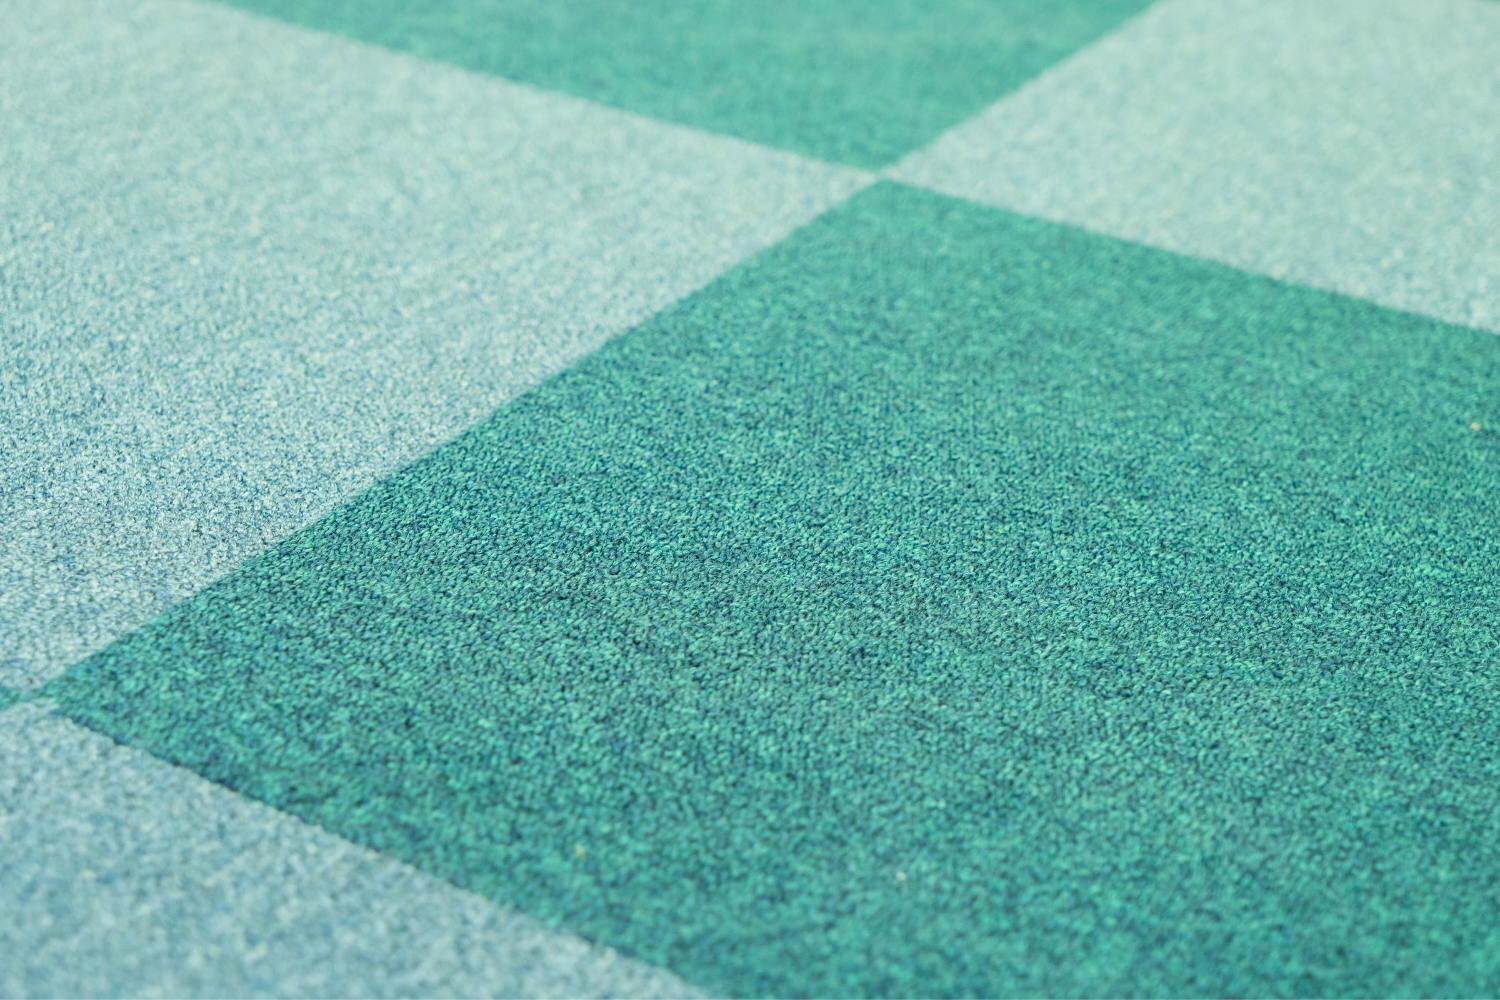 A closeup image of teal checkered carpet tiles